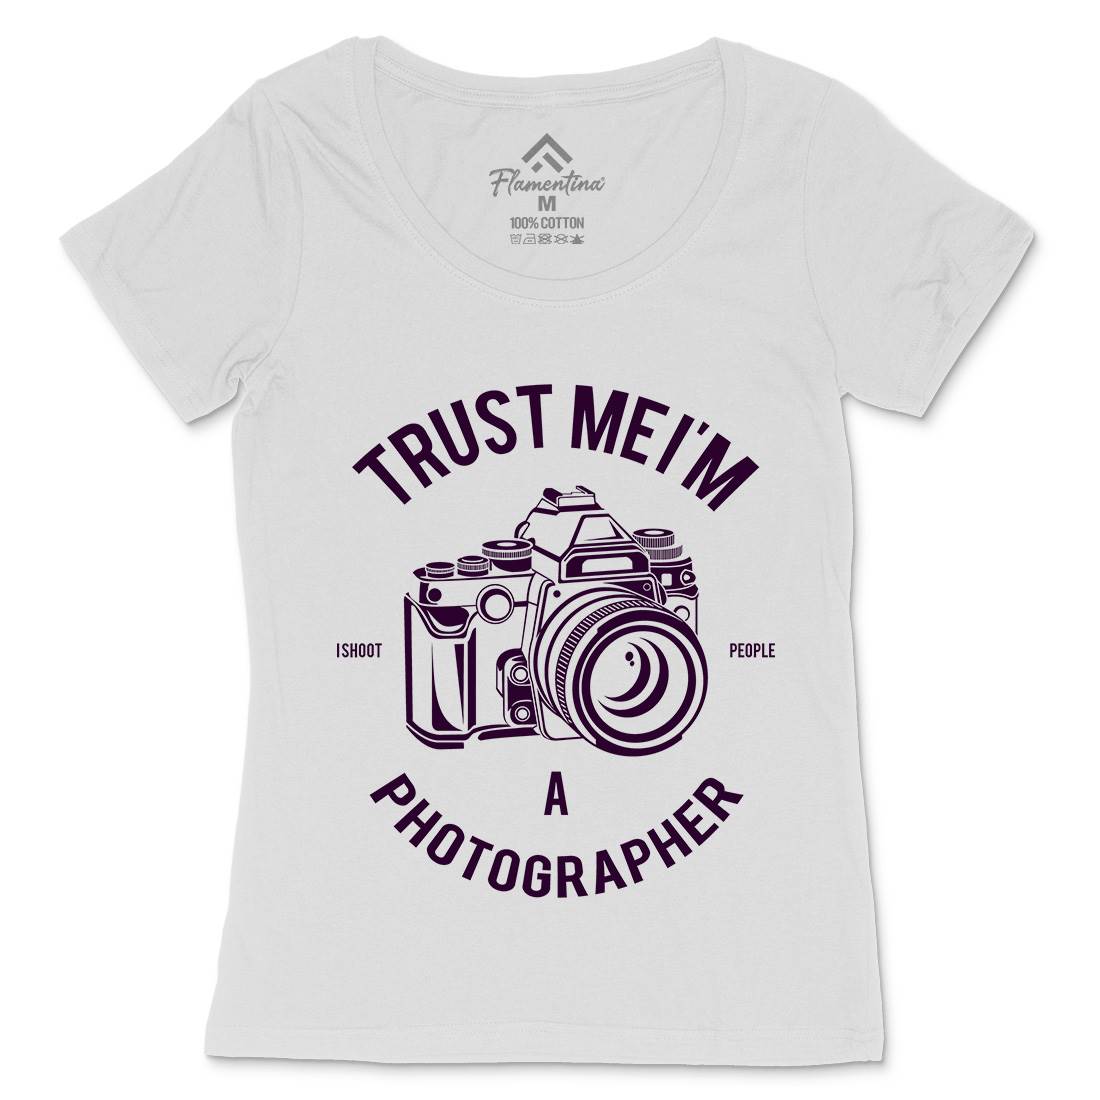 Photographer Womens Scoop Neck T-Shirt Media A110